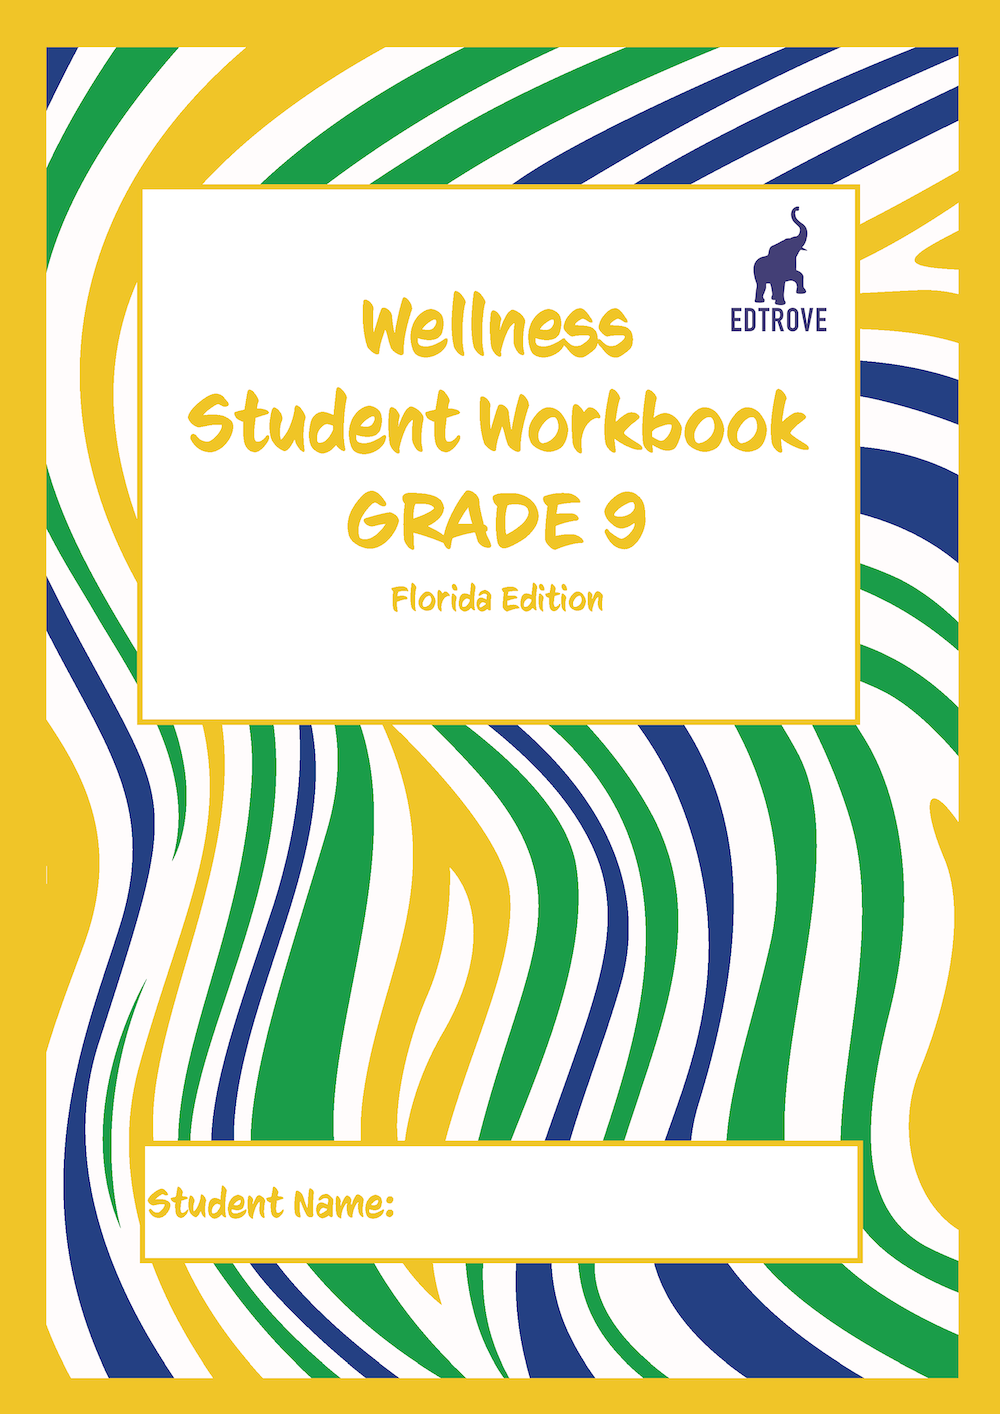 Wellness Student Workbook Grade 9 (Florida edition)